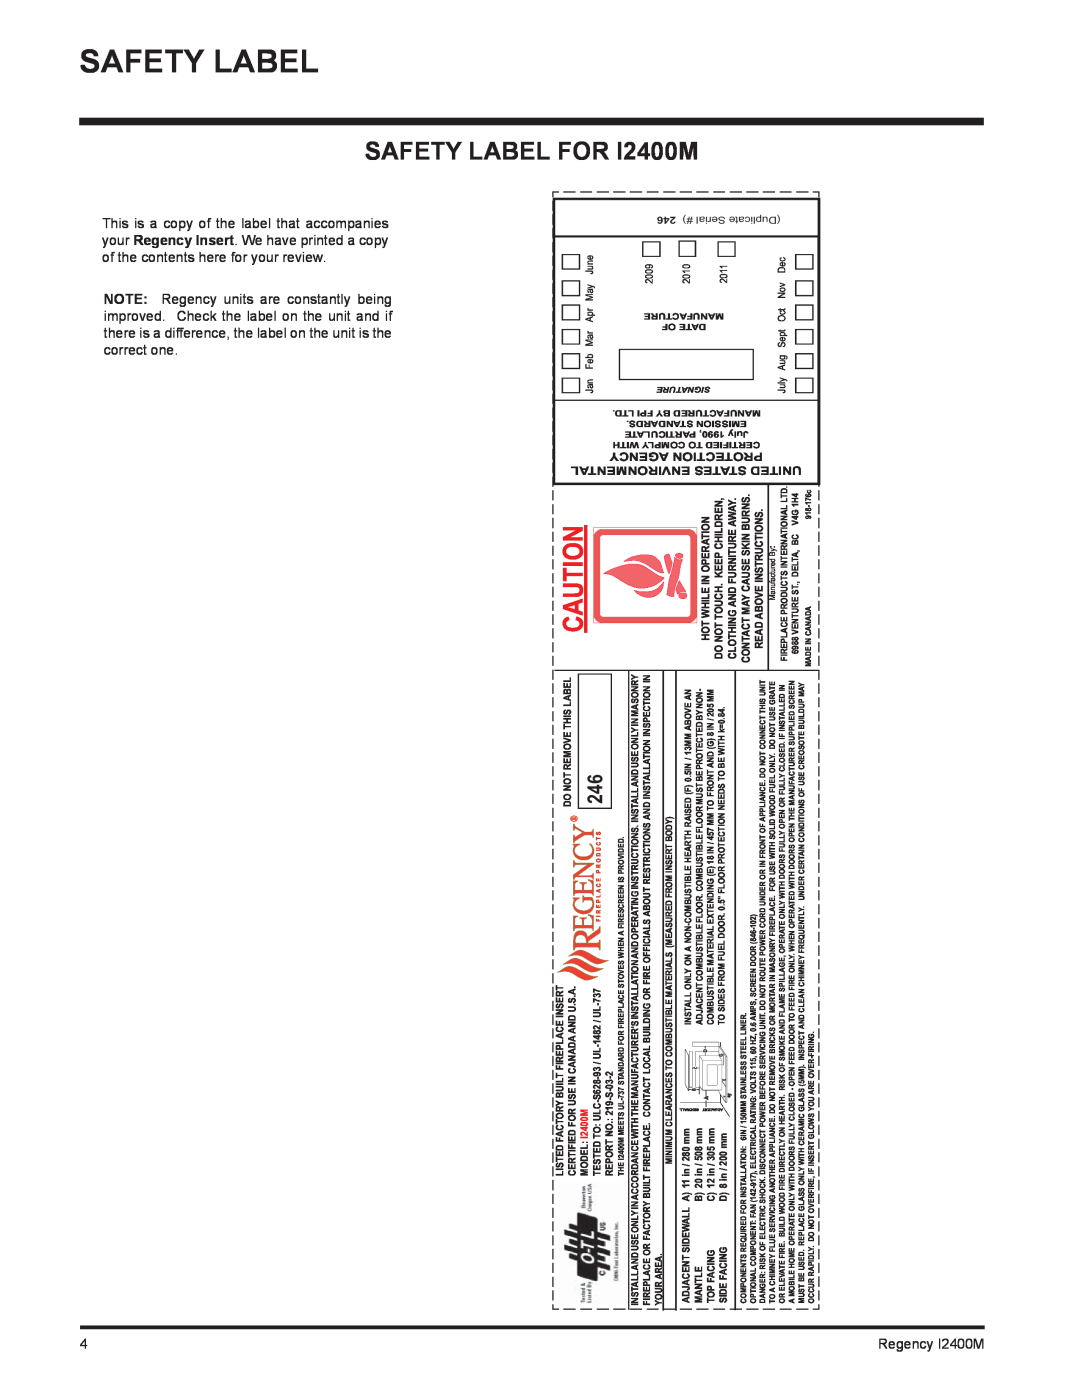 Regency Safety Label, FOR I2400M, United States Environmental, 2009, 2010, 2011, Sept, Duplicate Serial # 